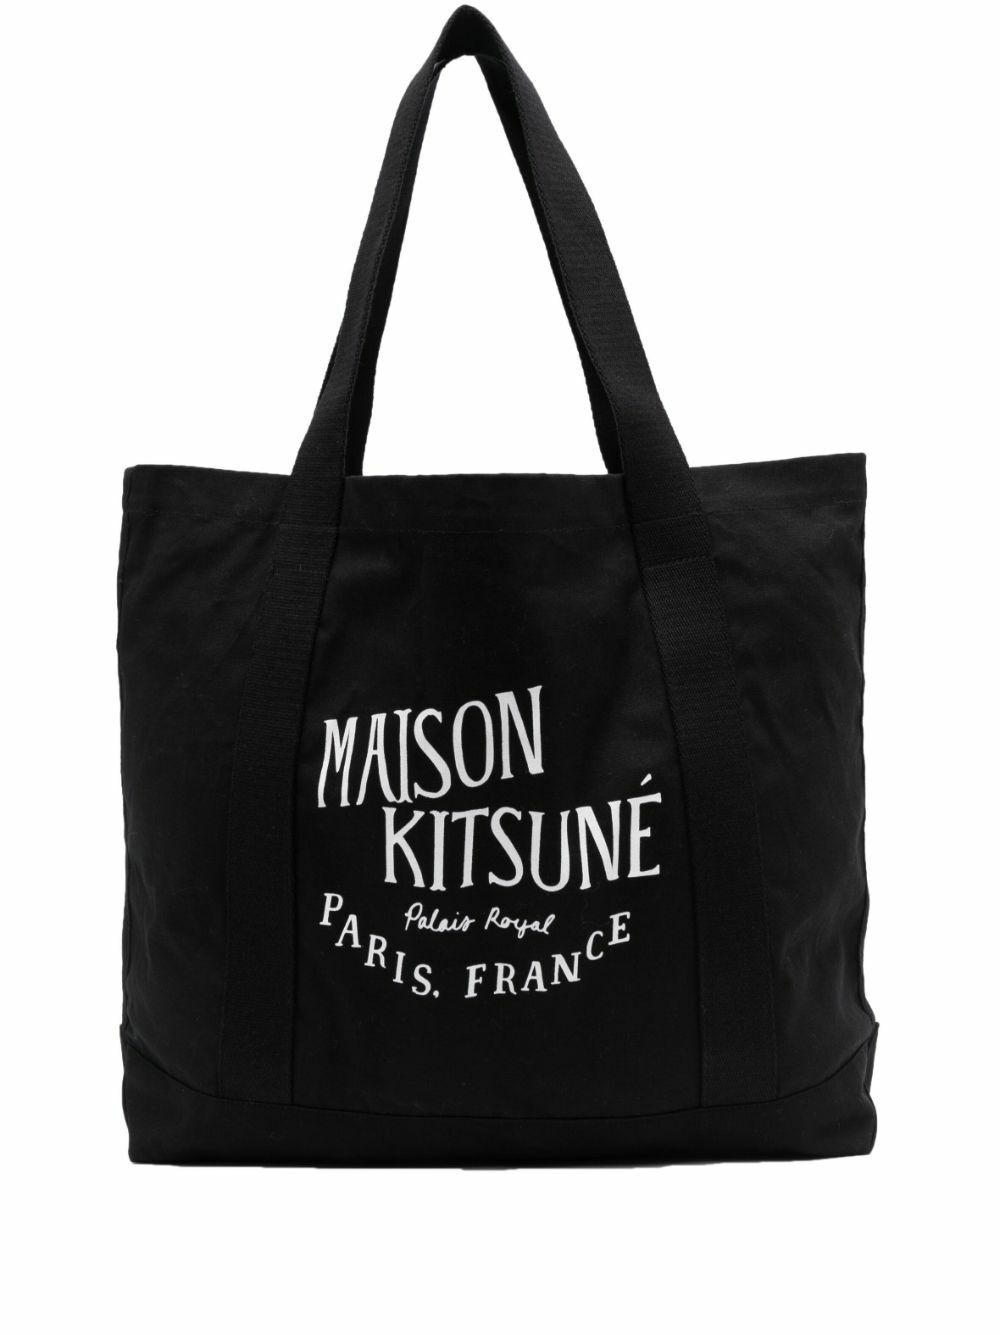 MAISON KITSUNE' - Palais Royal Tote Bag Maison Kitsune